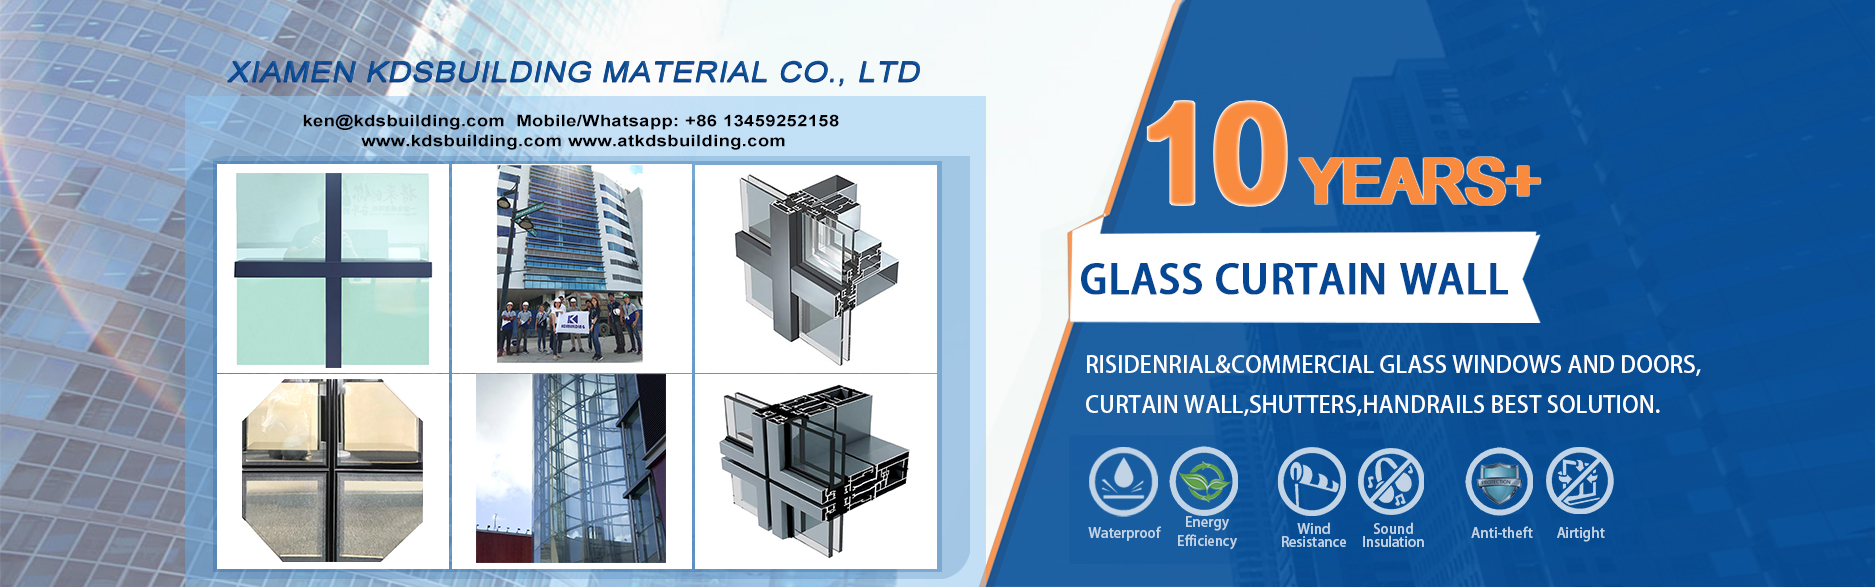 XIAMEN KDSBUILDING MATERIAL CO.,LTD-glass curtain wall supplier